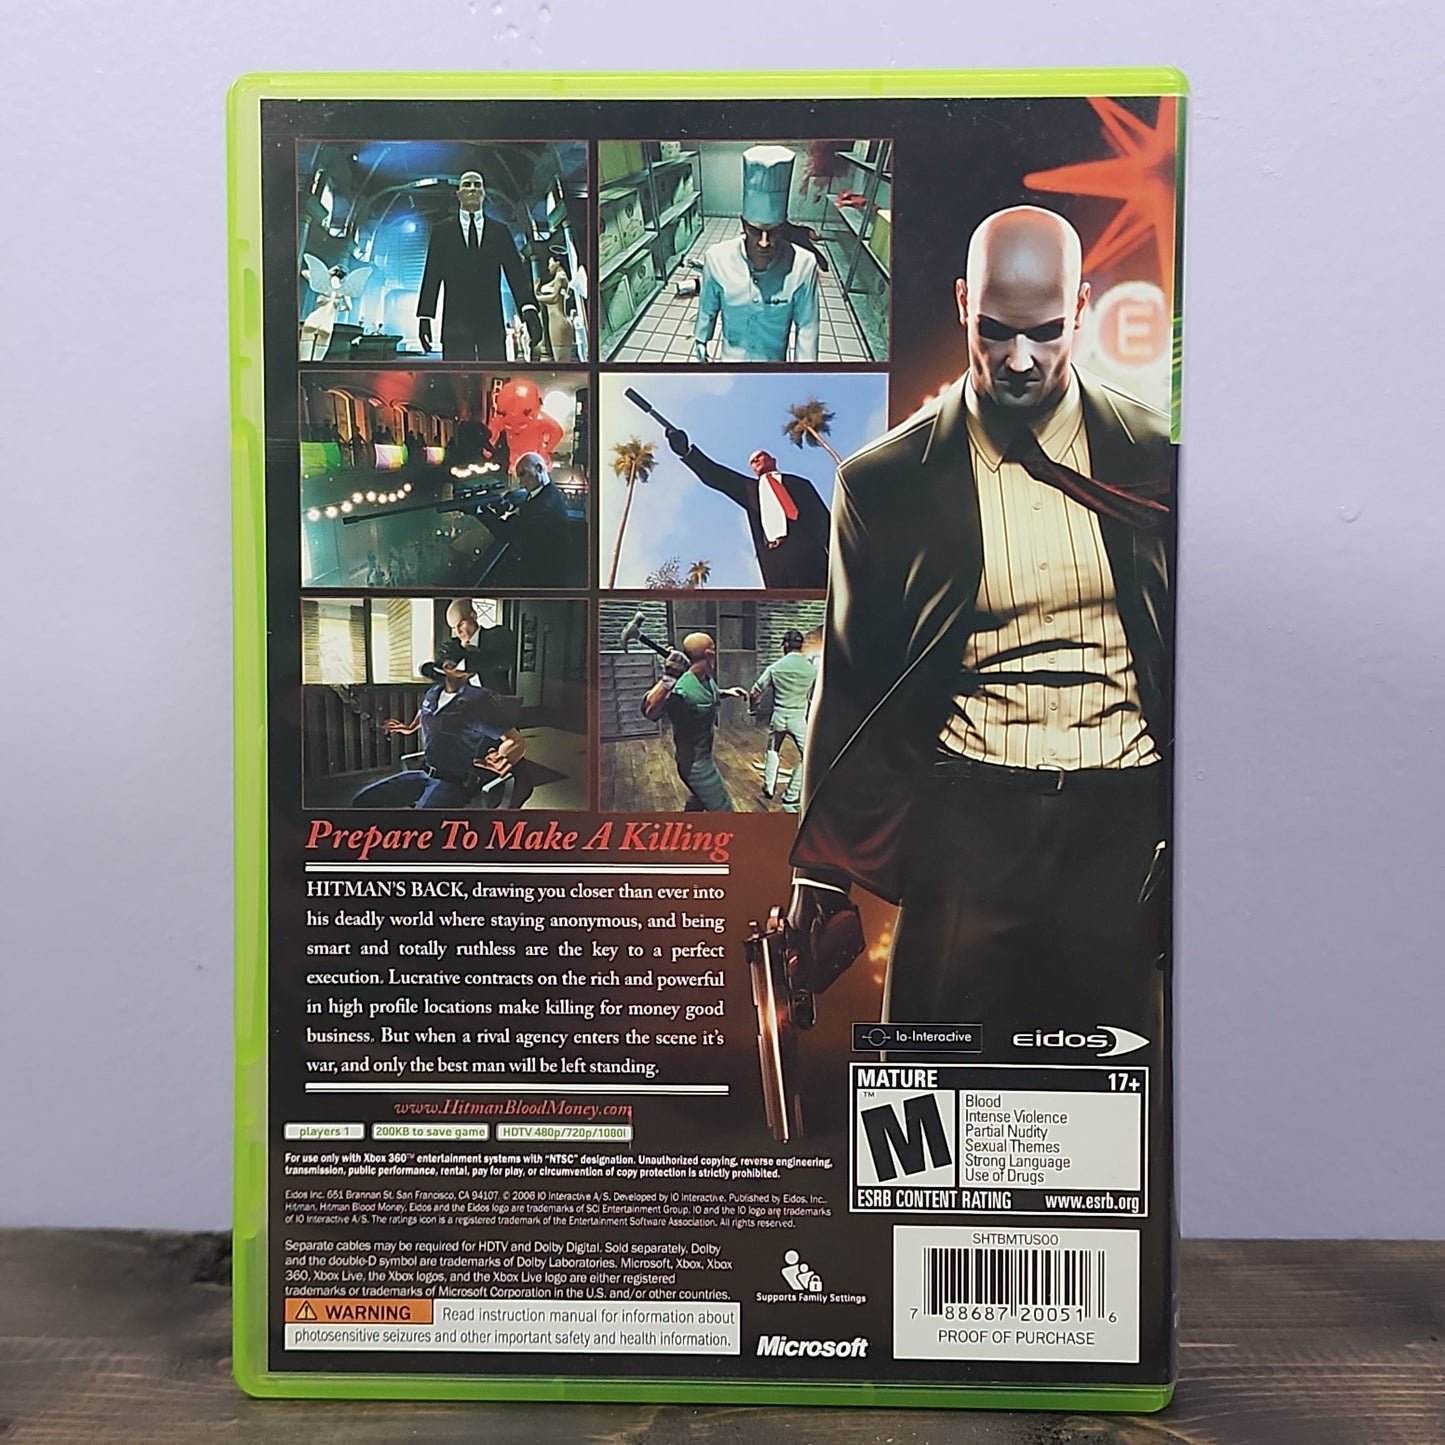 Xbox 360 - Hitman: Blood Money Retrograde Collectibles Action, Adventure, CIB, Eidos, Hitman Series, Io Interactive, M Rated, Singleplayer, Stealth, Xbox 3 Preowned Video Game 